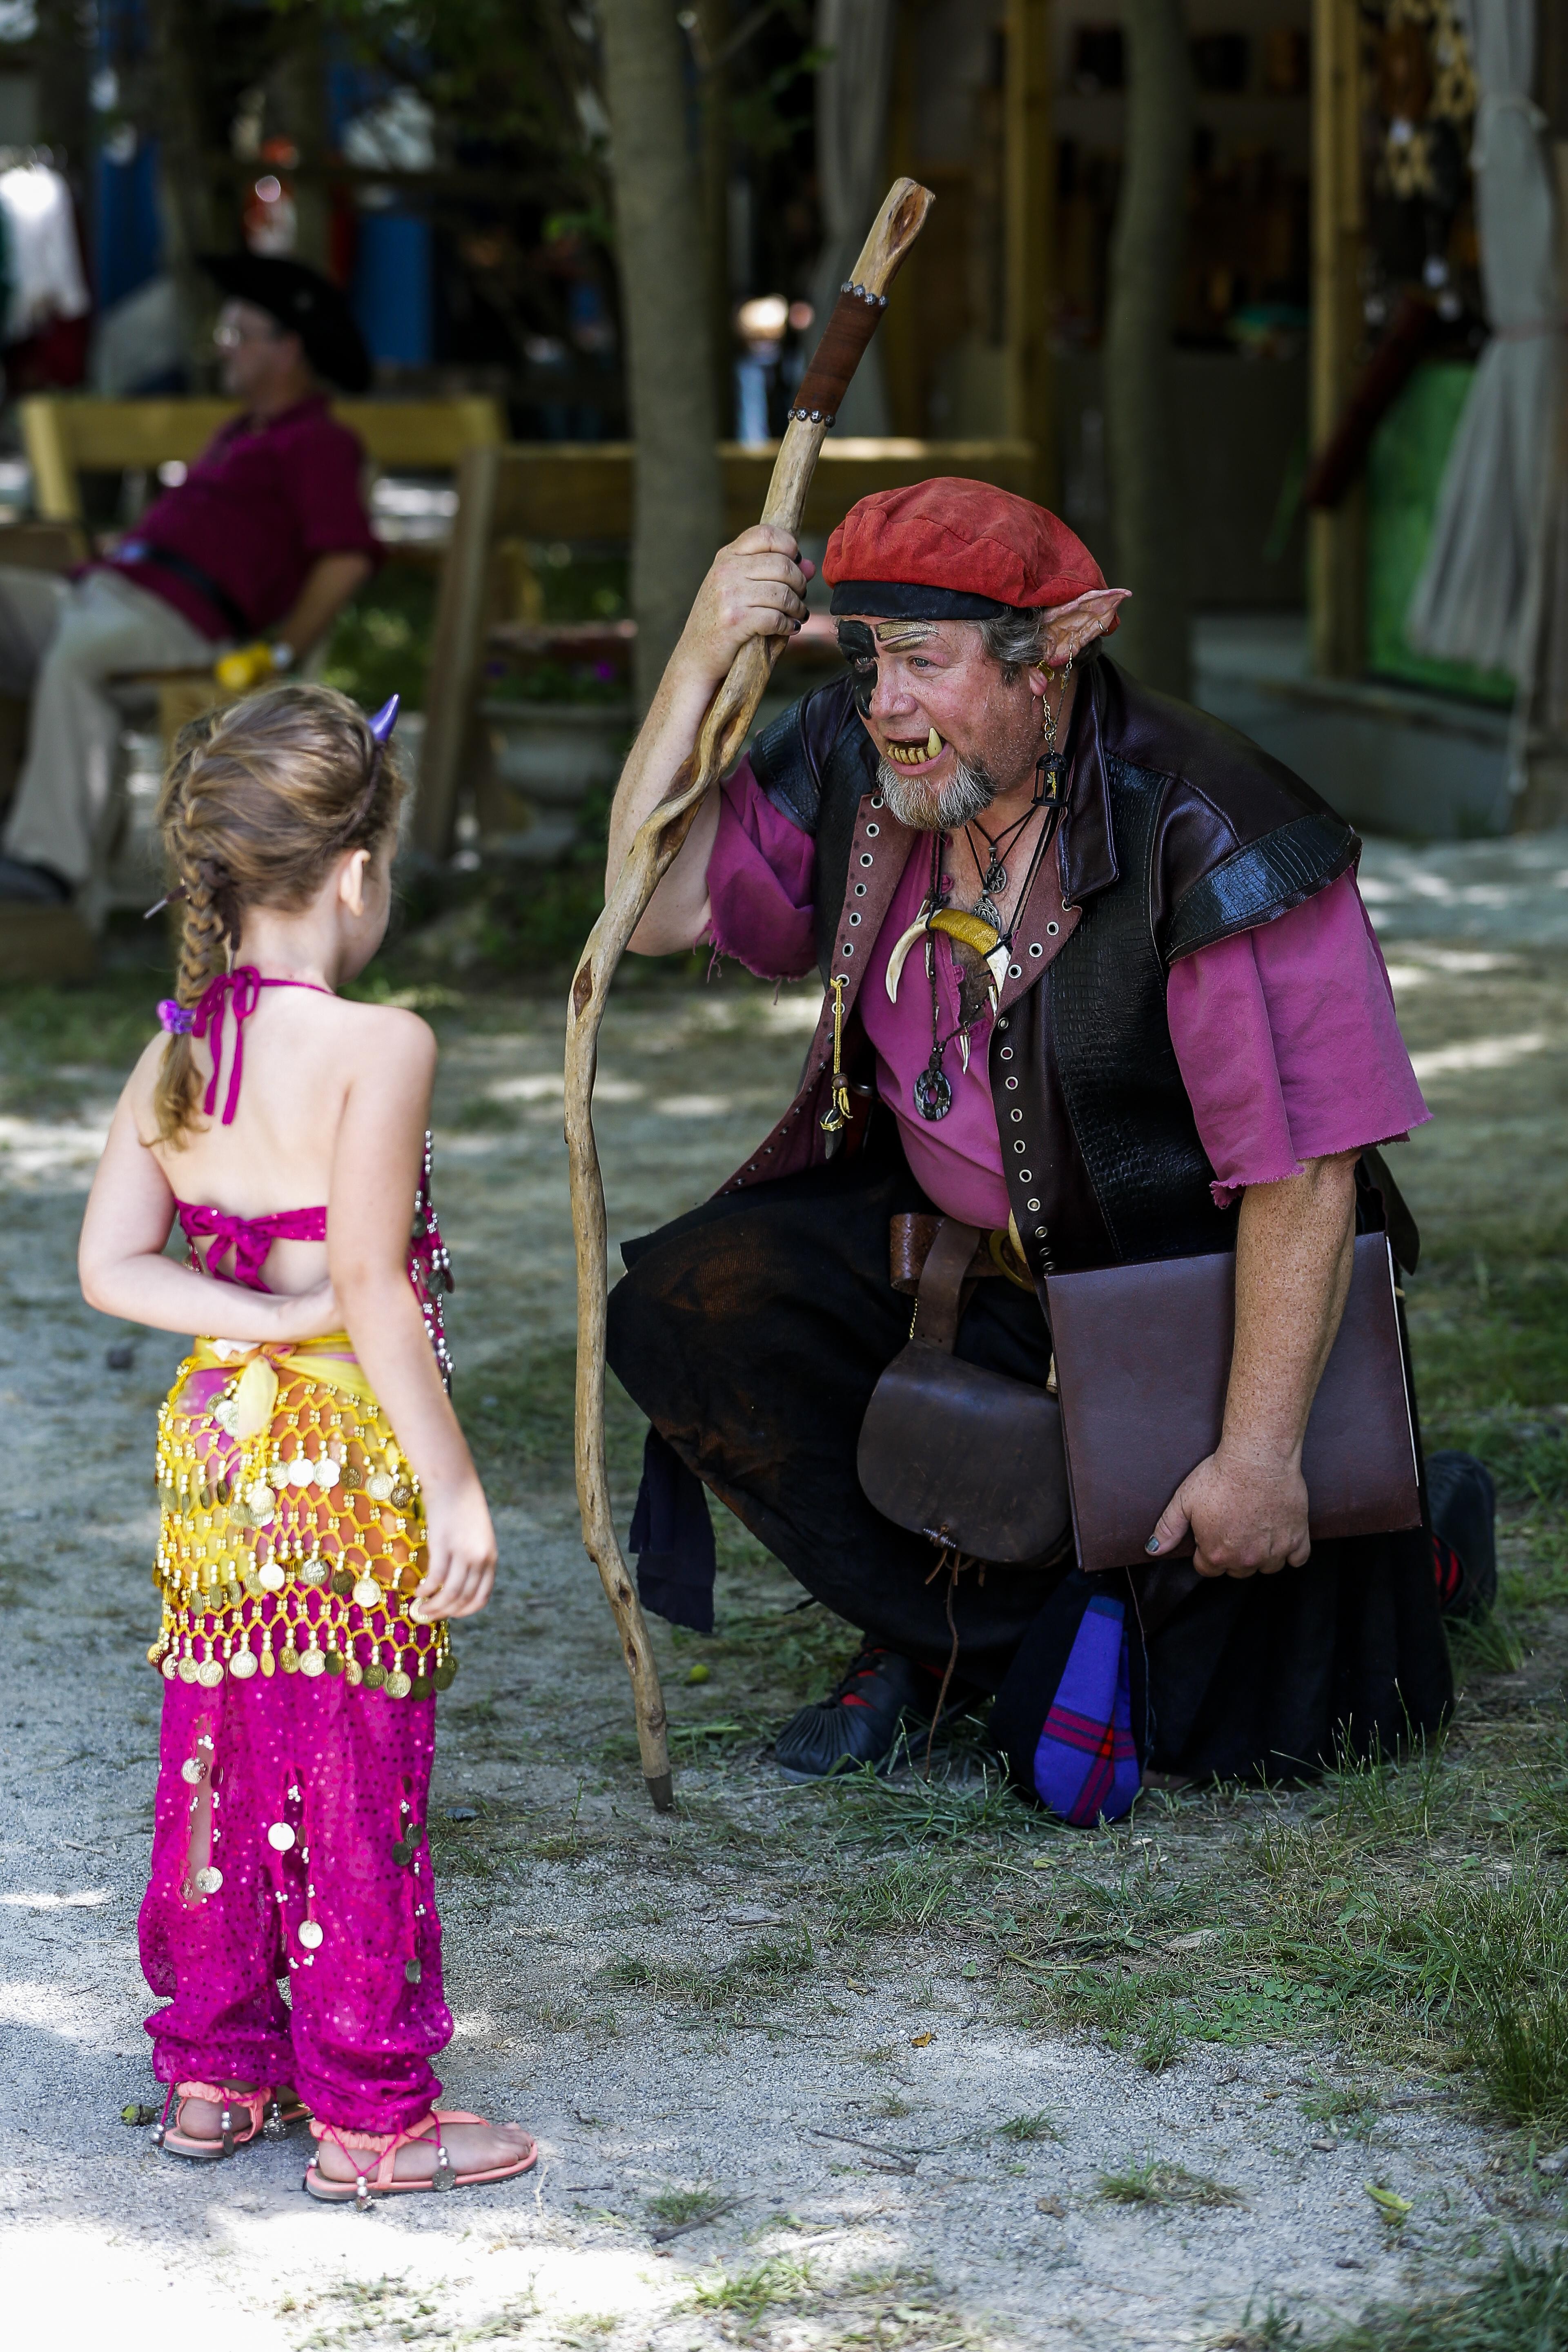 Ebenezer Grumpypants speaks to a young festival attendee.